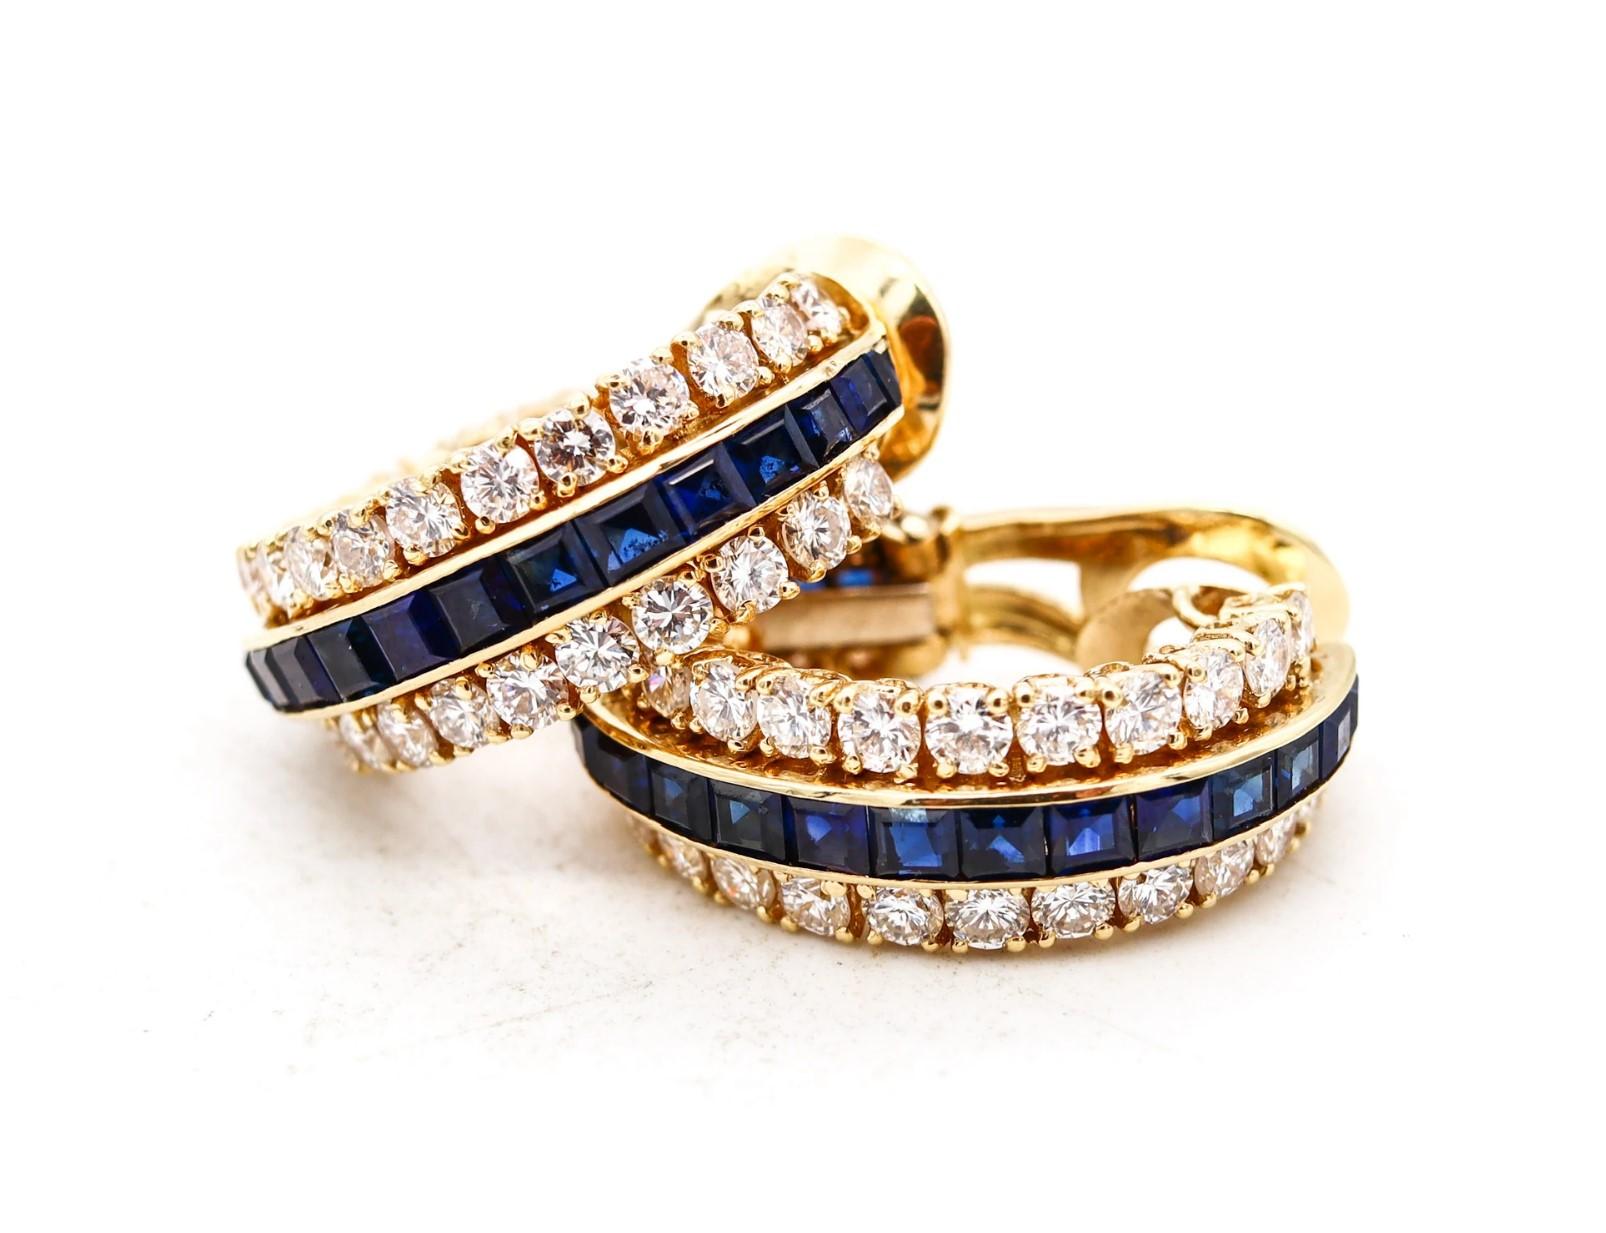 Modernist Van Cleef & Arpels 1970 Paris Clip Earrings 18Kt Gold 9.04 Ct Diamonds Sapphires